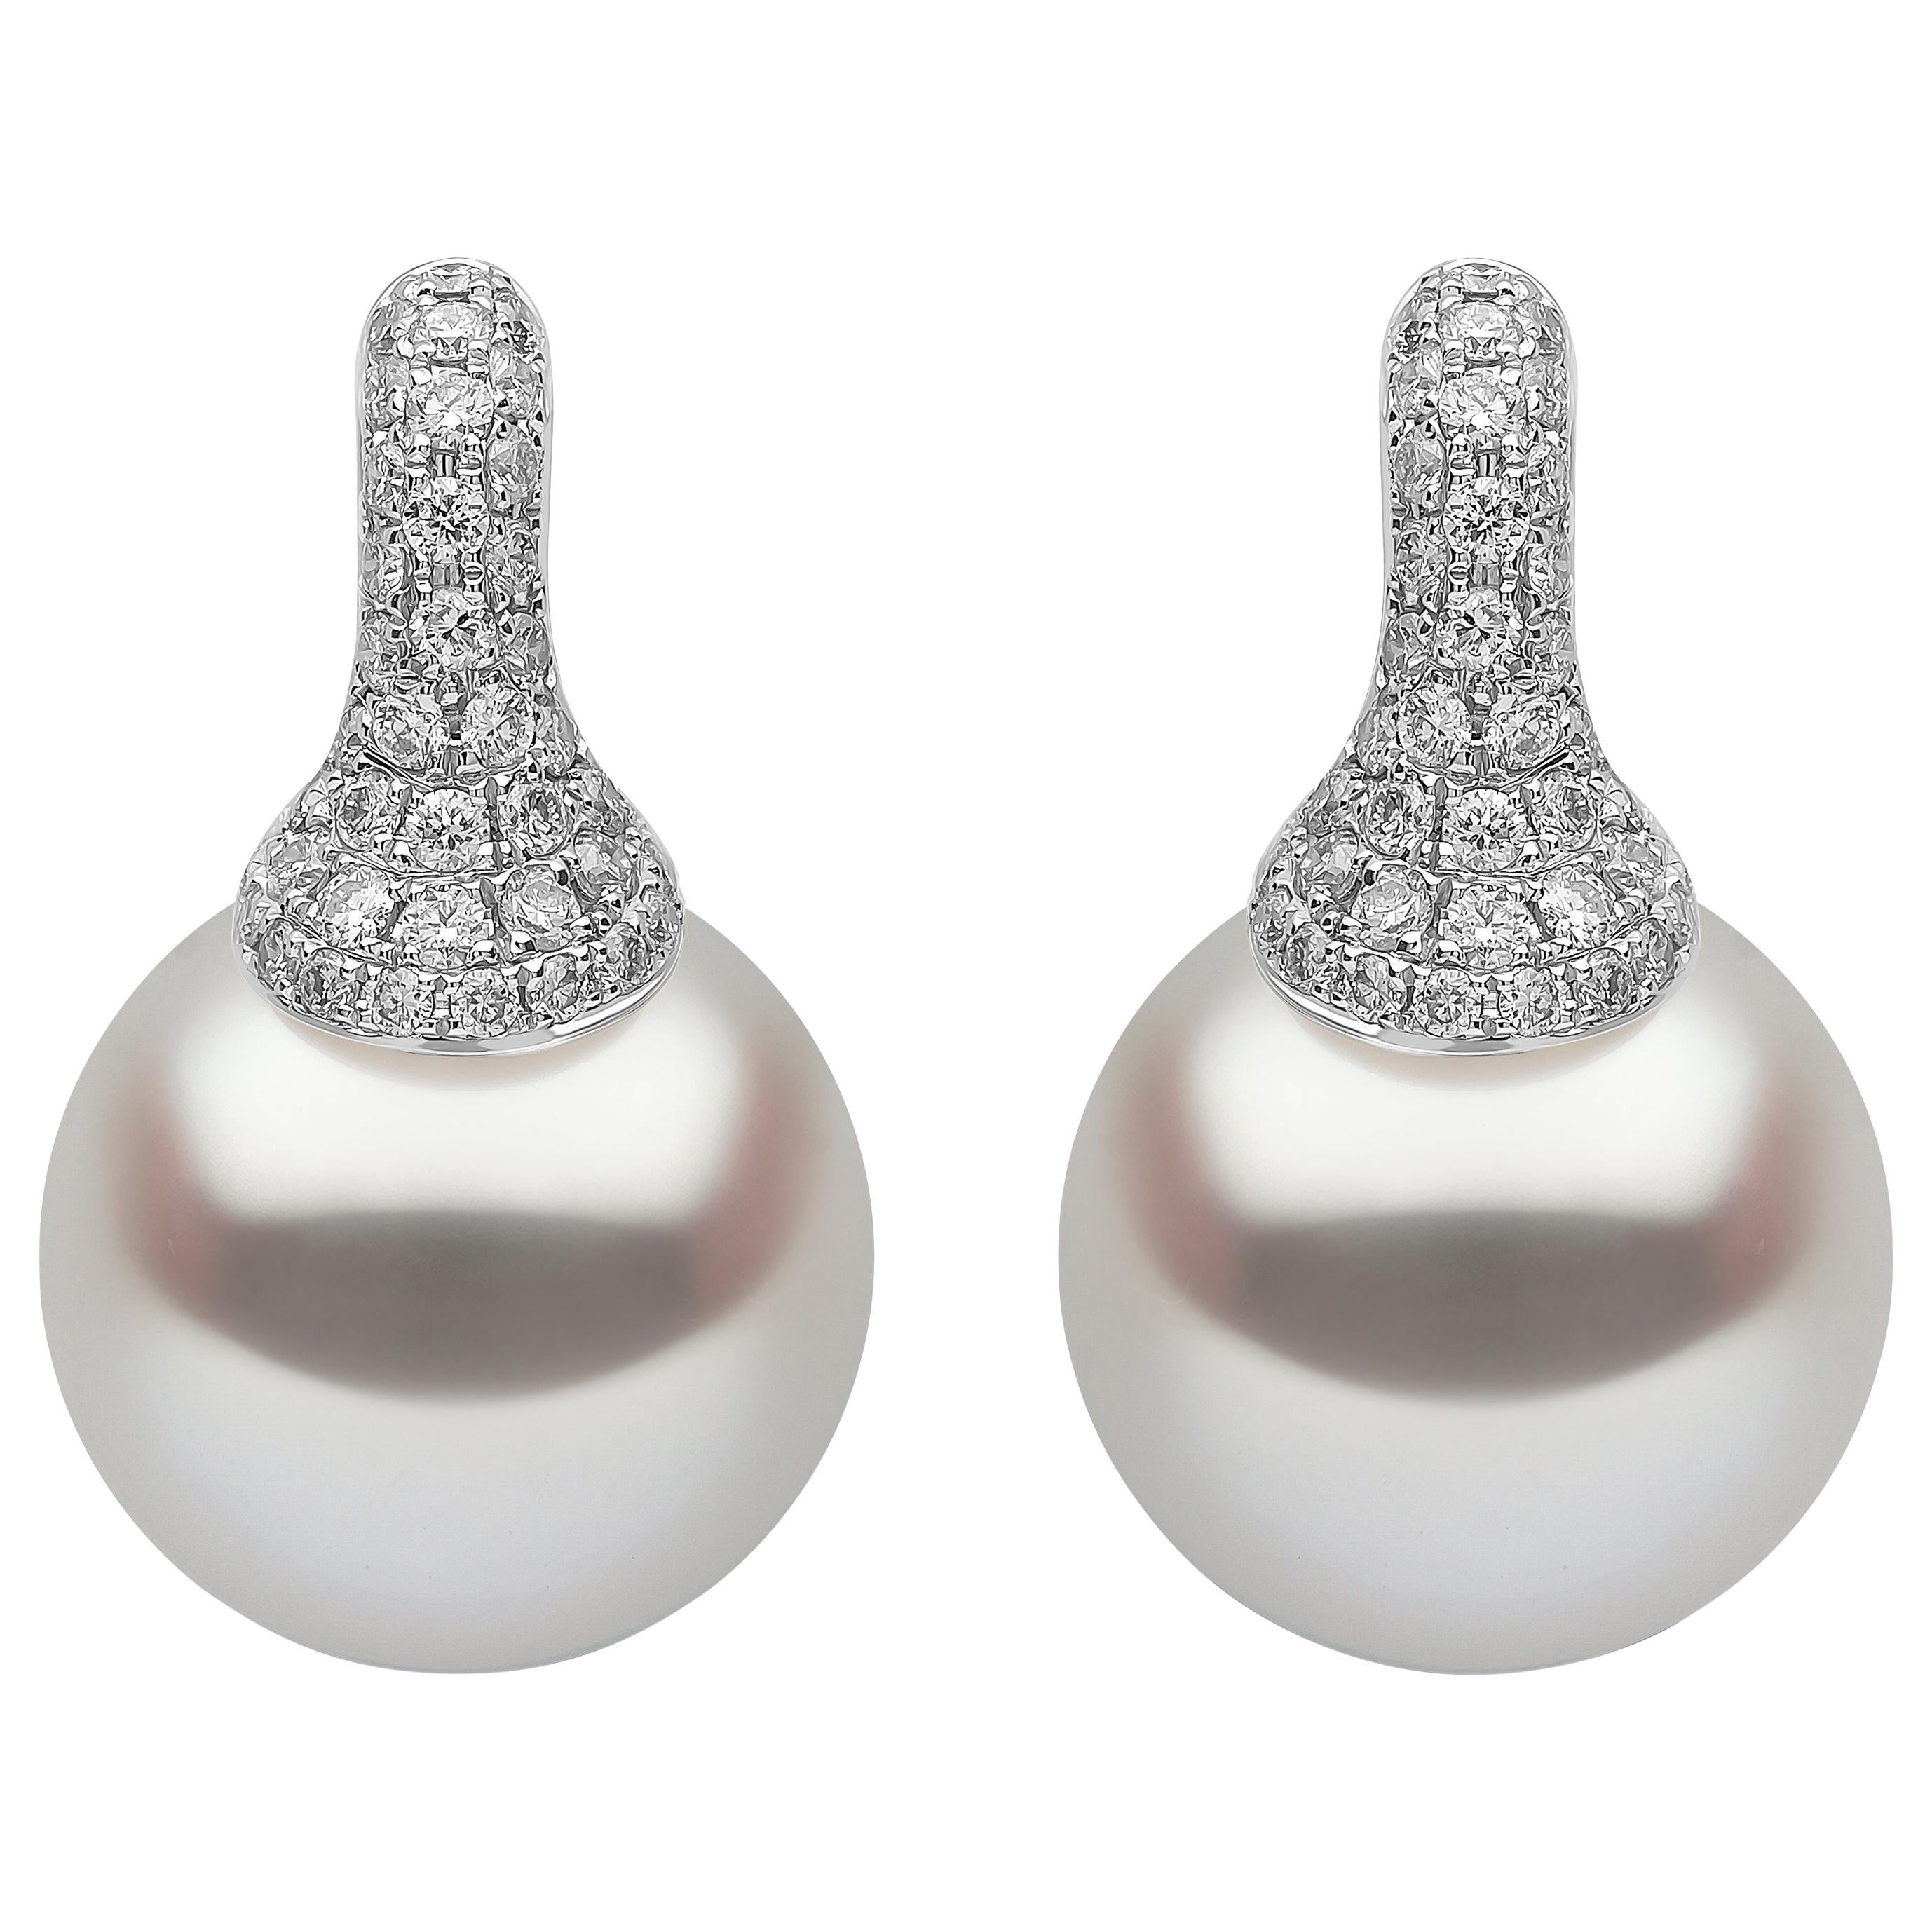 Yoko London South Sea Pearl and Diamond Earrings in 18 Karat White Gold